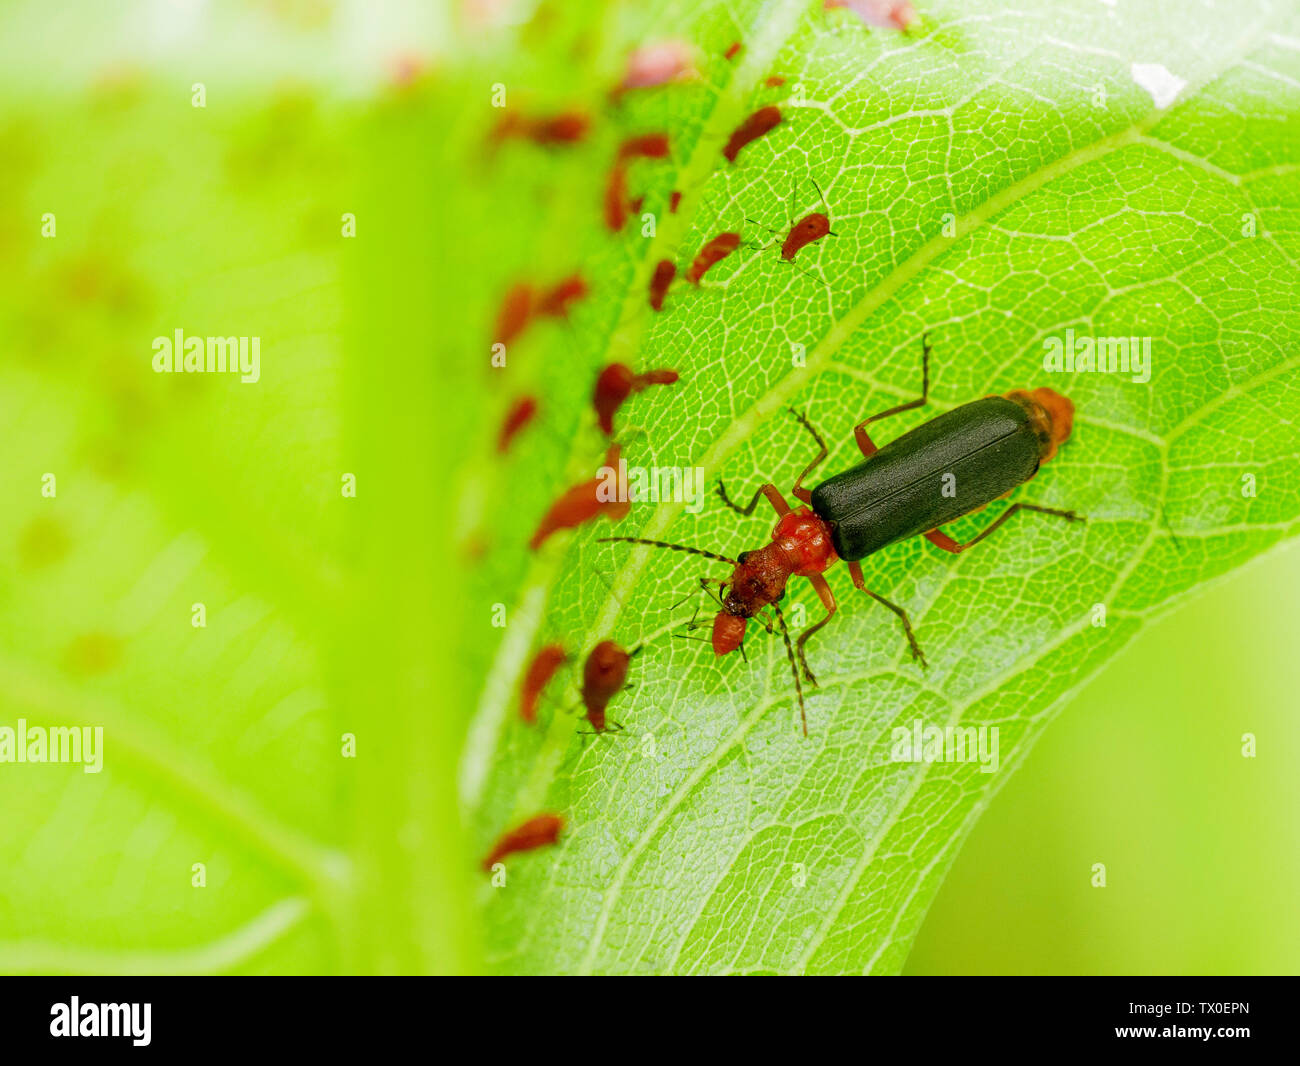 Leatherwing lanuginosa o soldato beetle (Podabrus tomentosus), attaccando un afide. Foto Stock